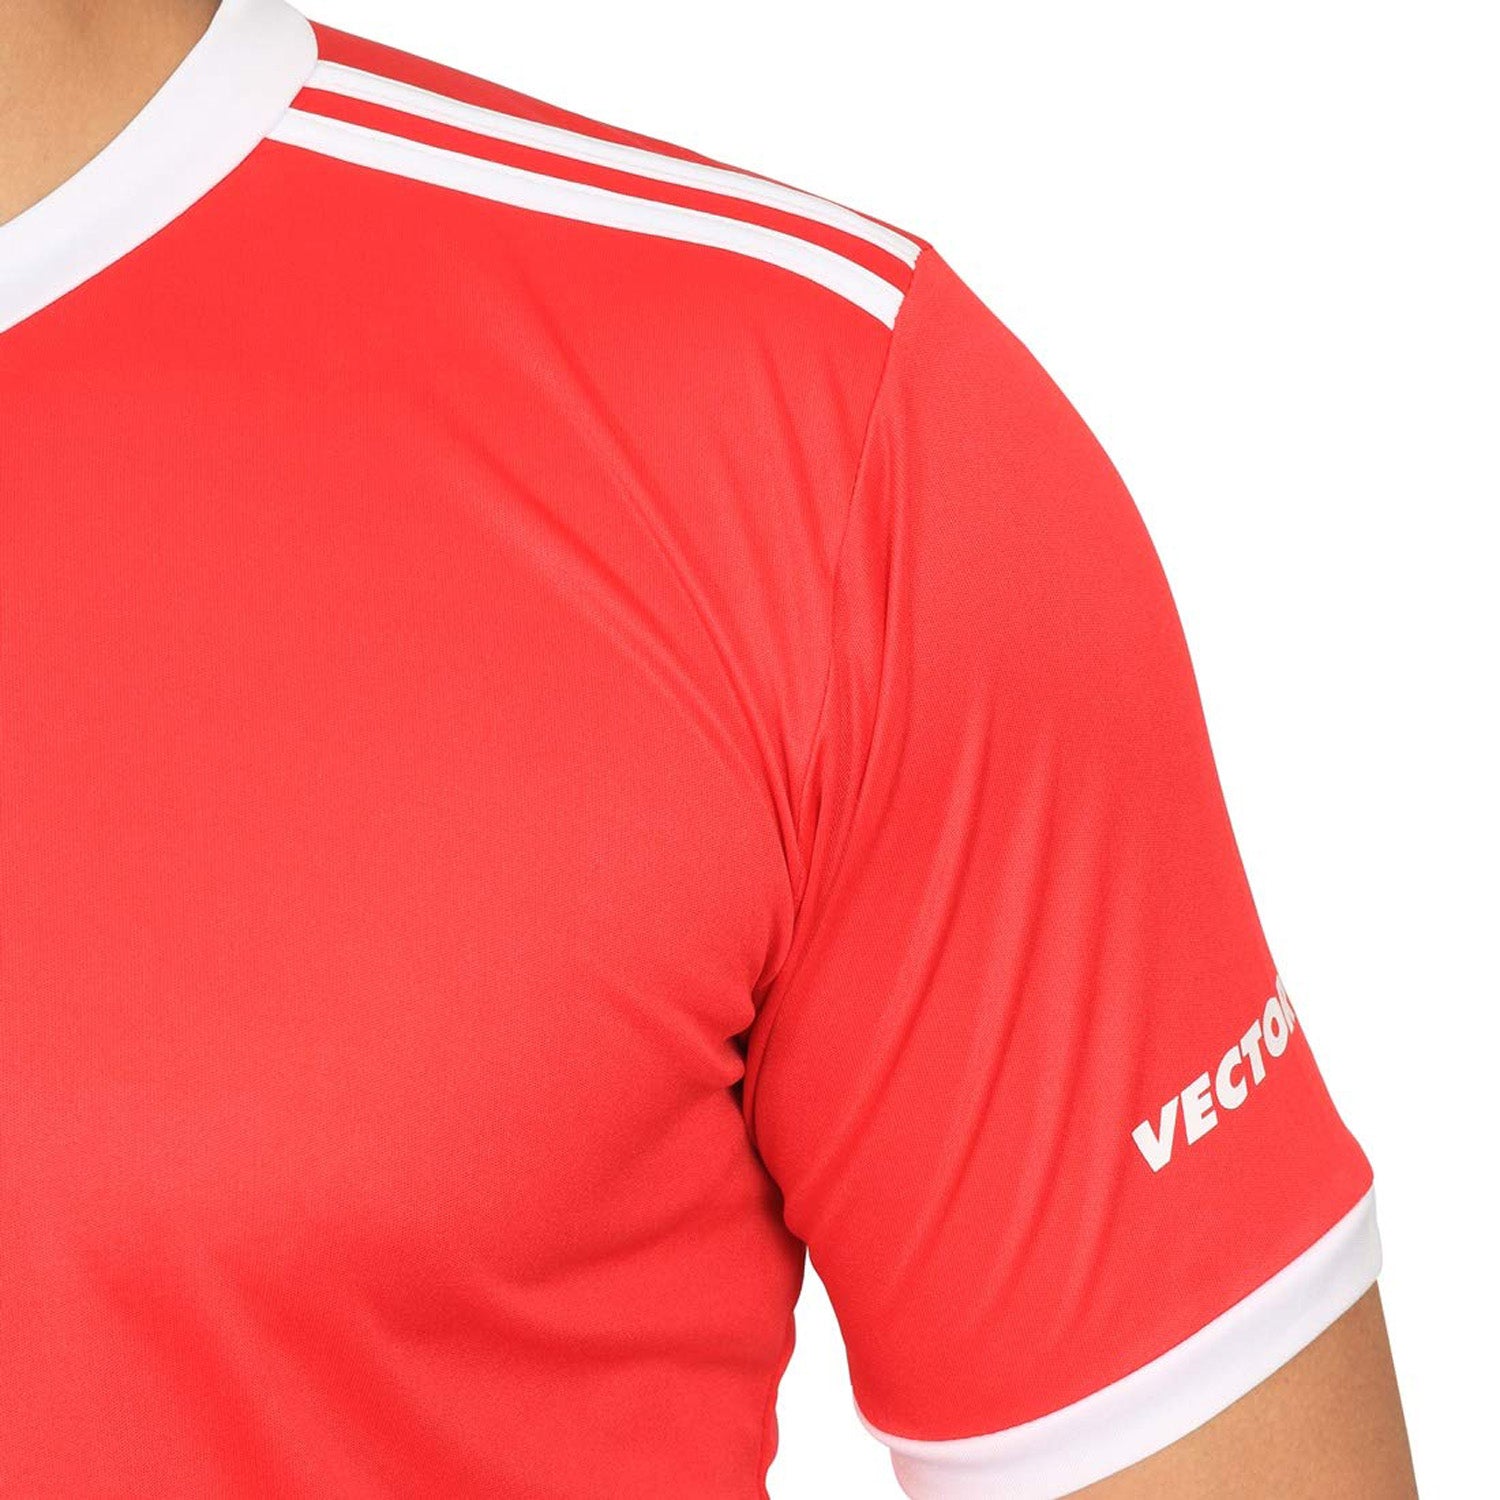 Vector X VFS-002-B Soccer Set for Men's , Red - Best Price online Prokicksports.com